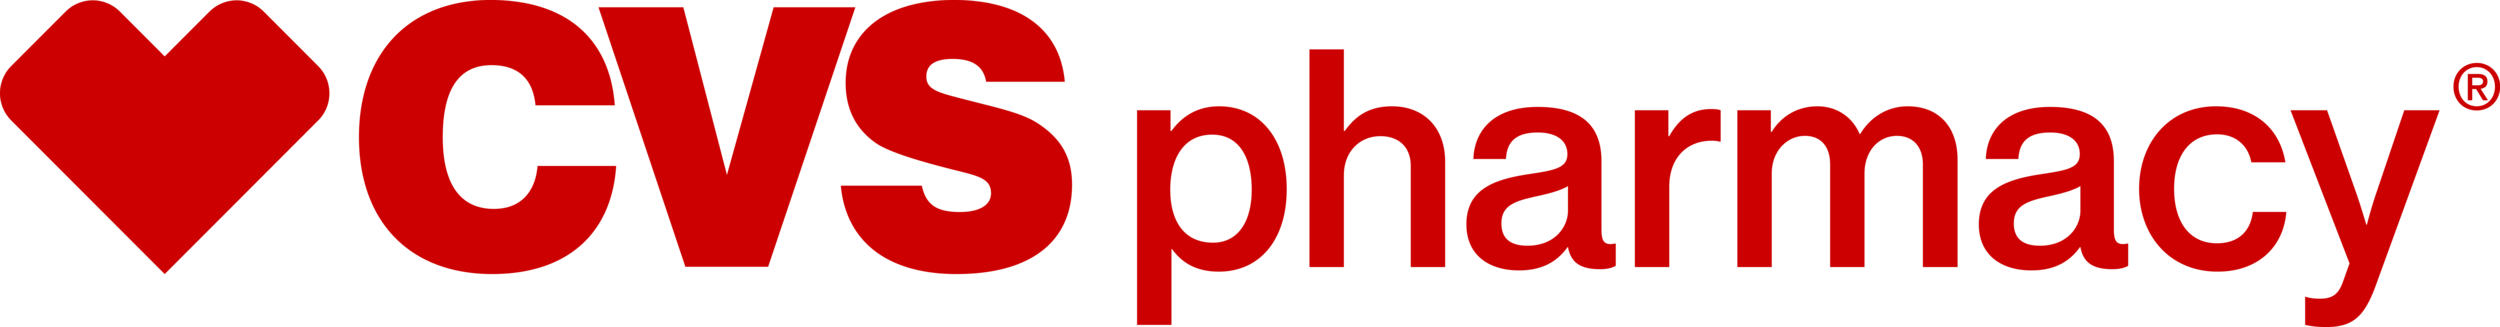 cvs-pharmacy-logo.png